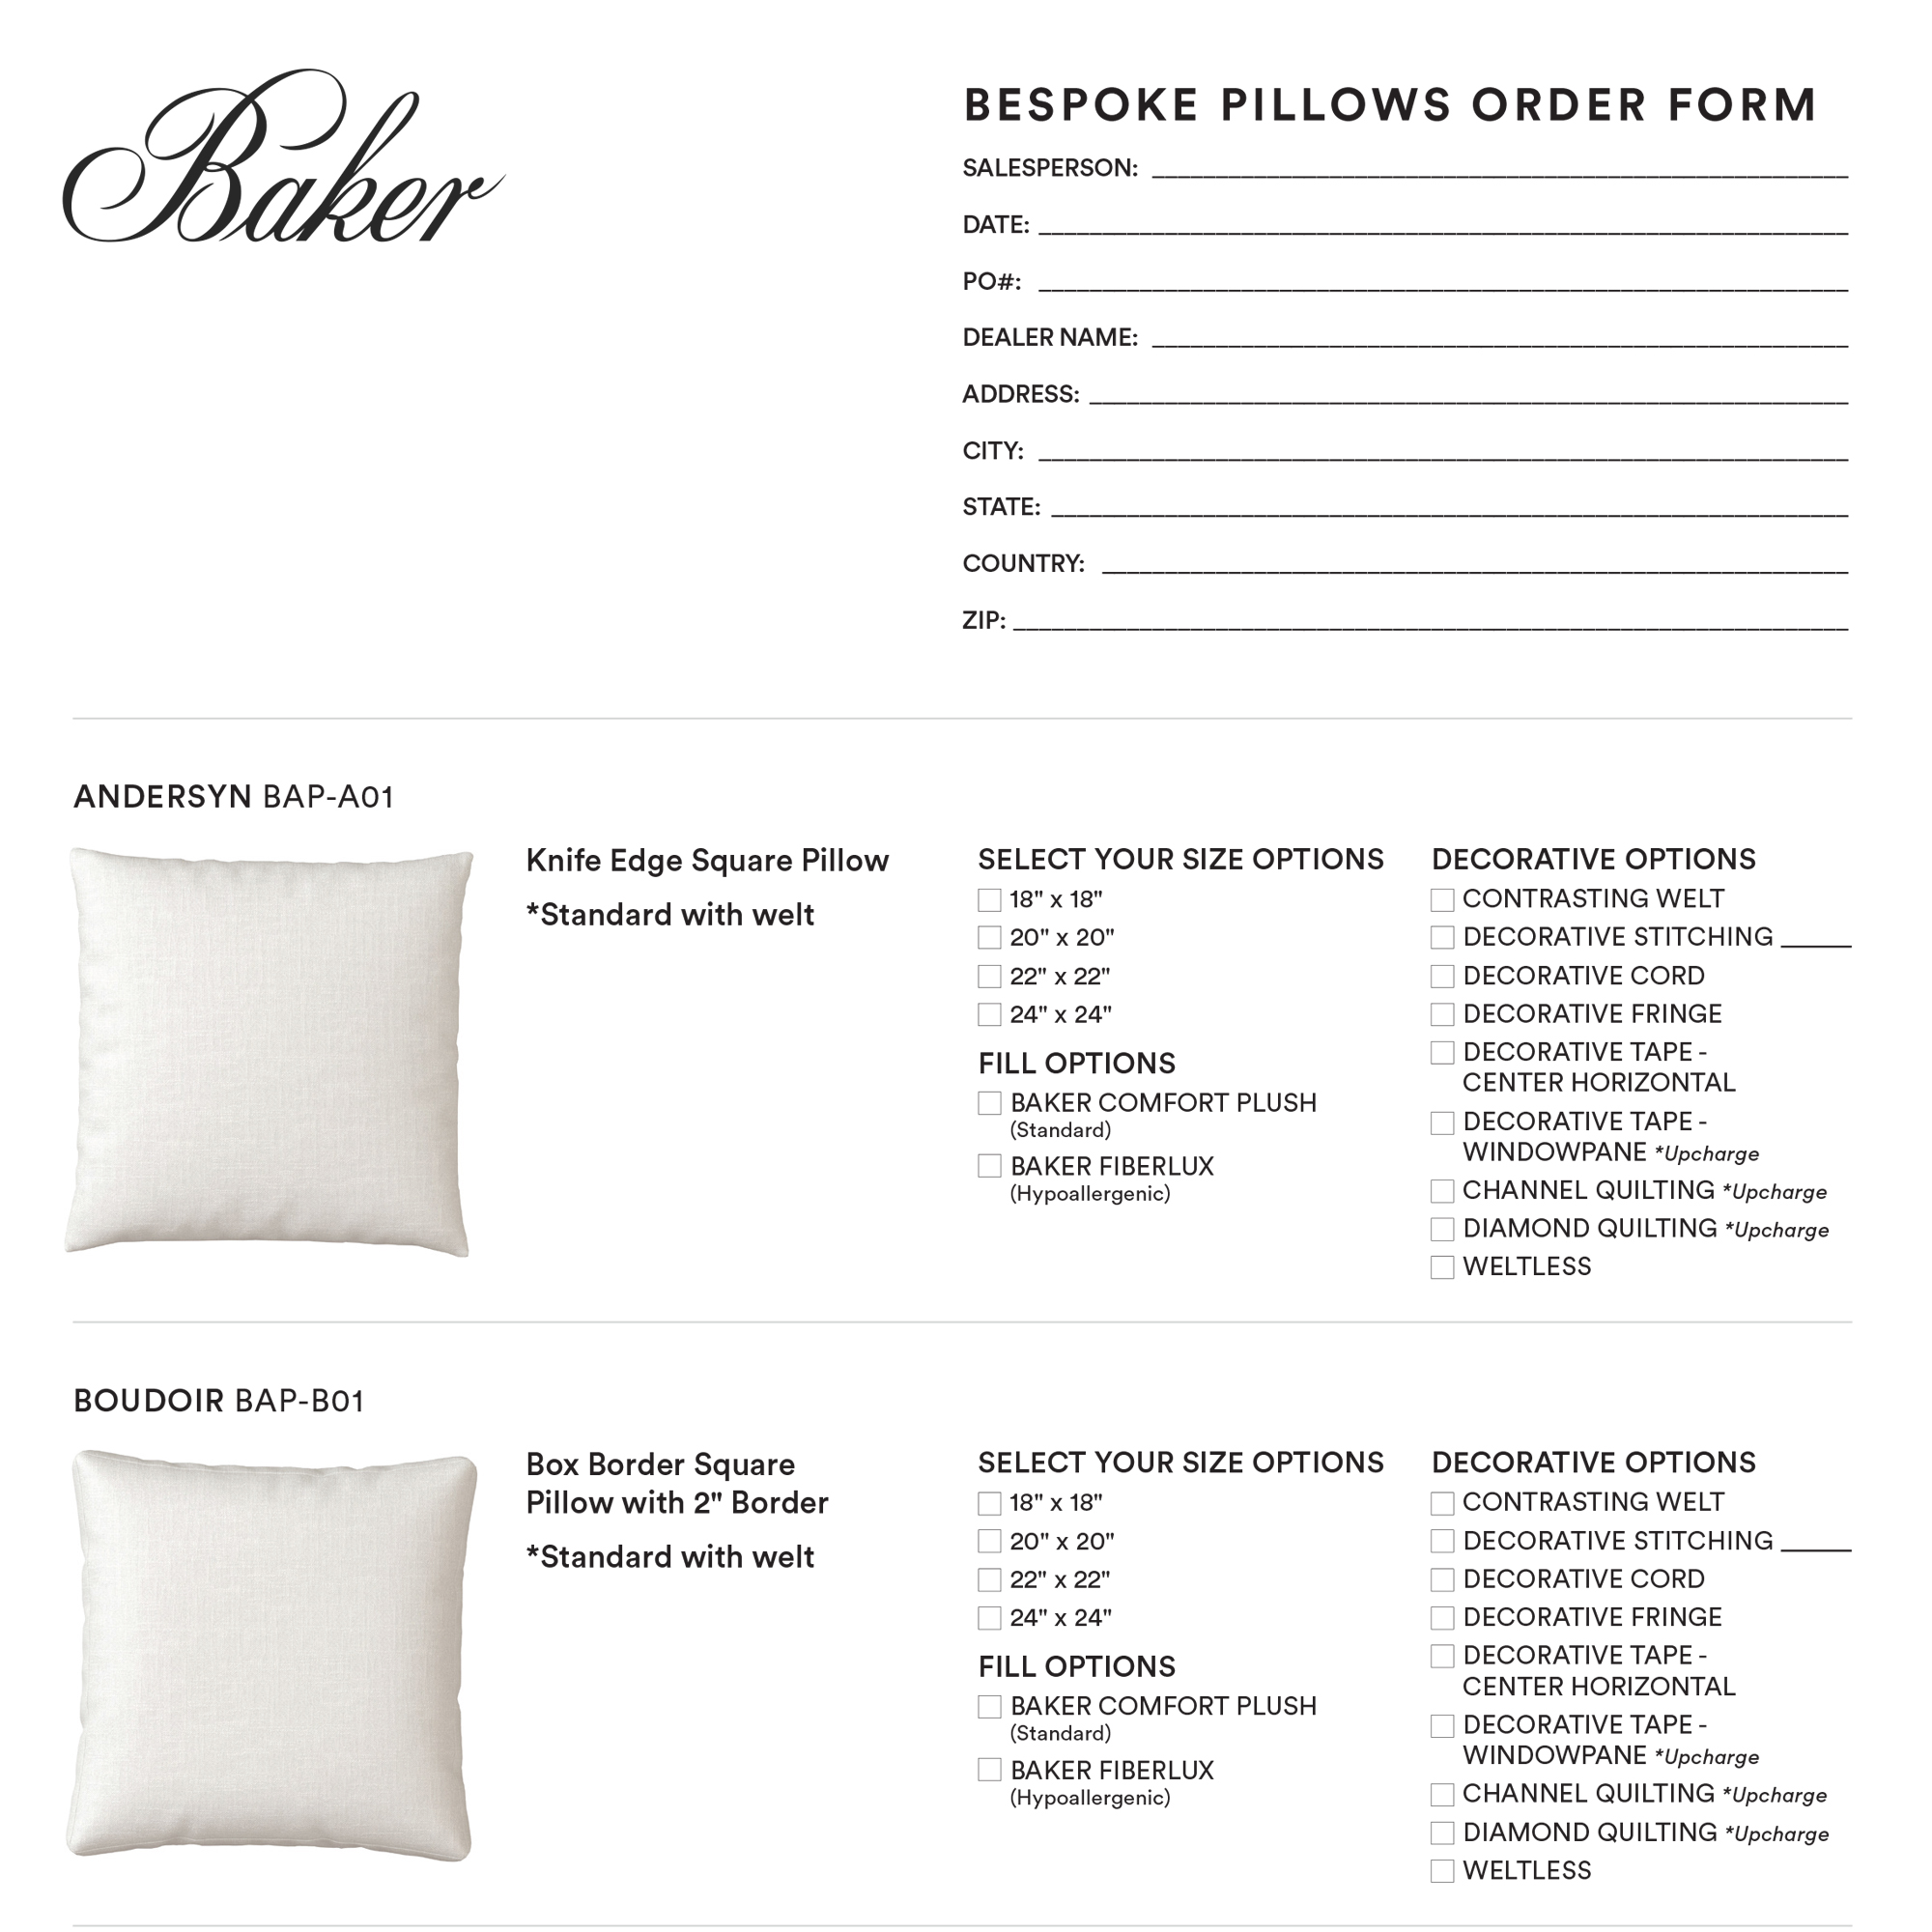 Bespoke Pillows Order Form